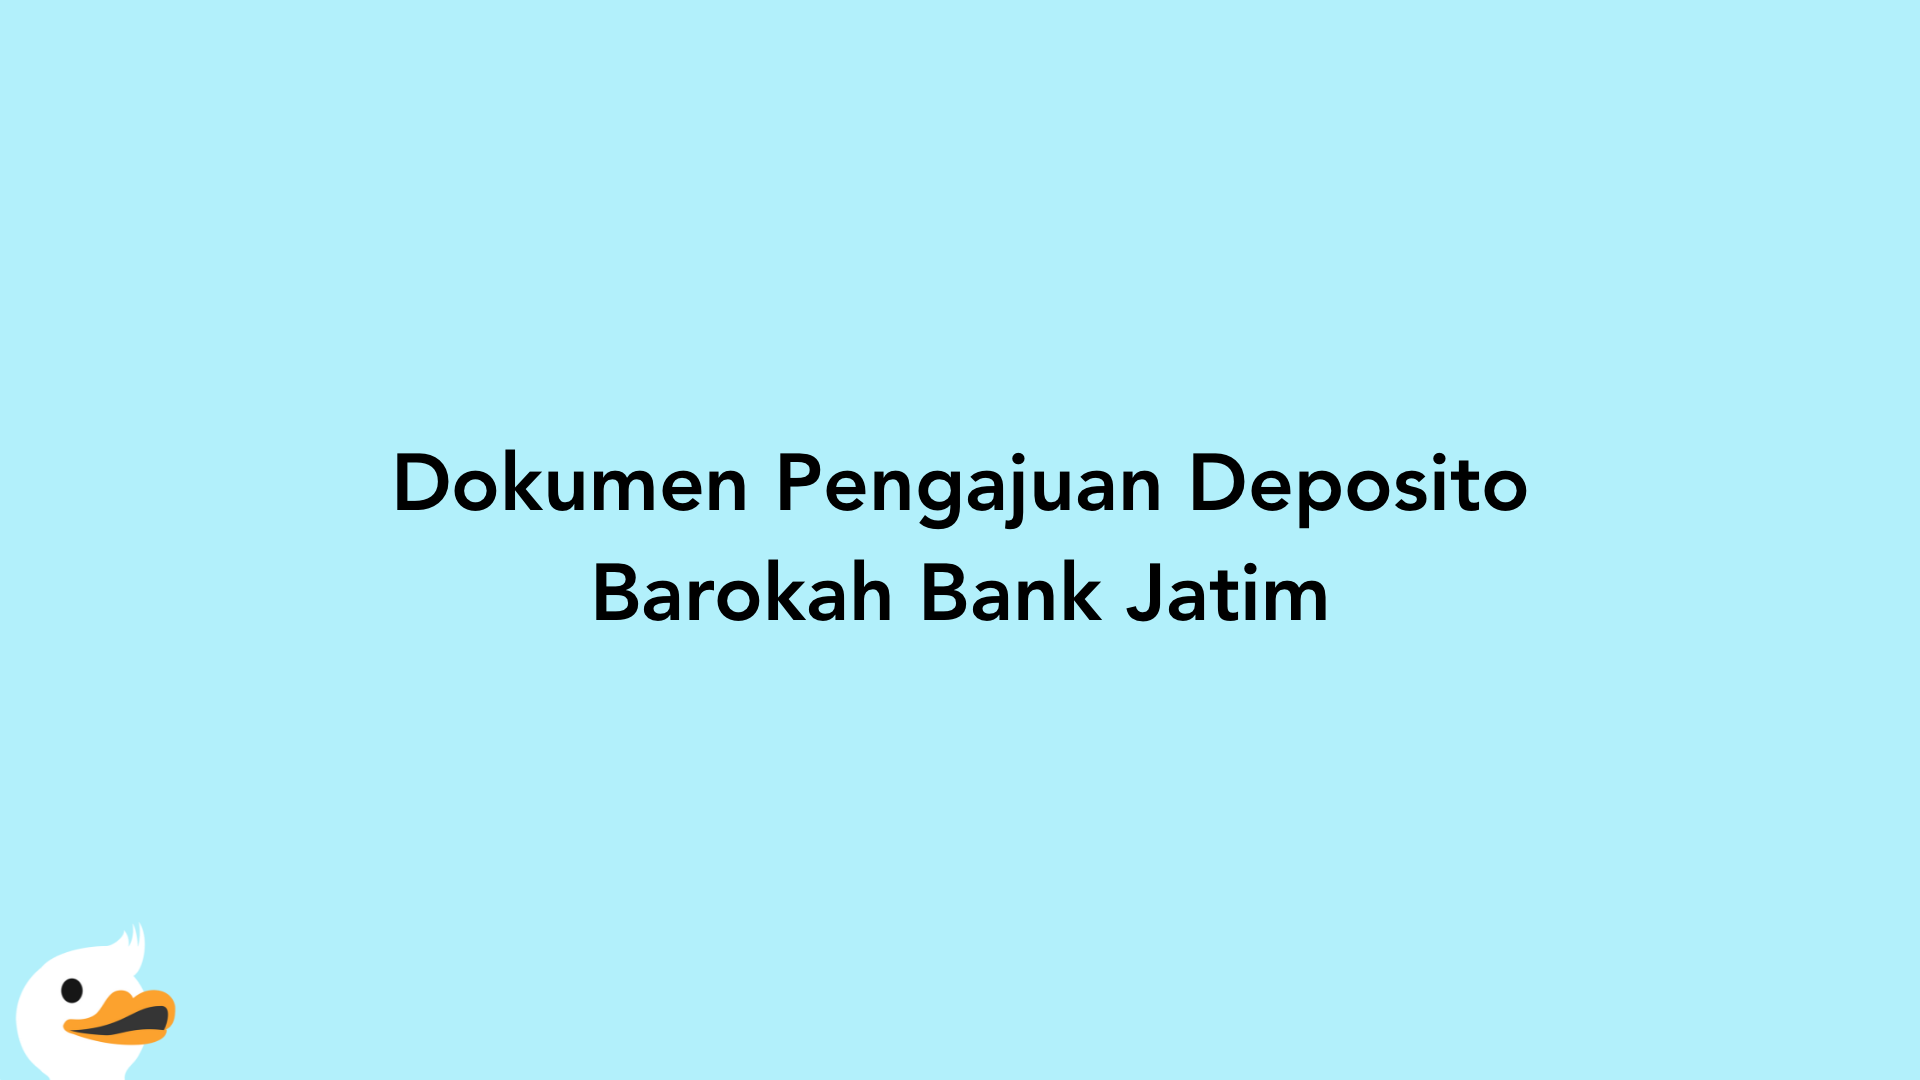 Dokumen Pengajuan Deposito Barokah Bank Jatim